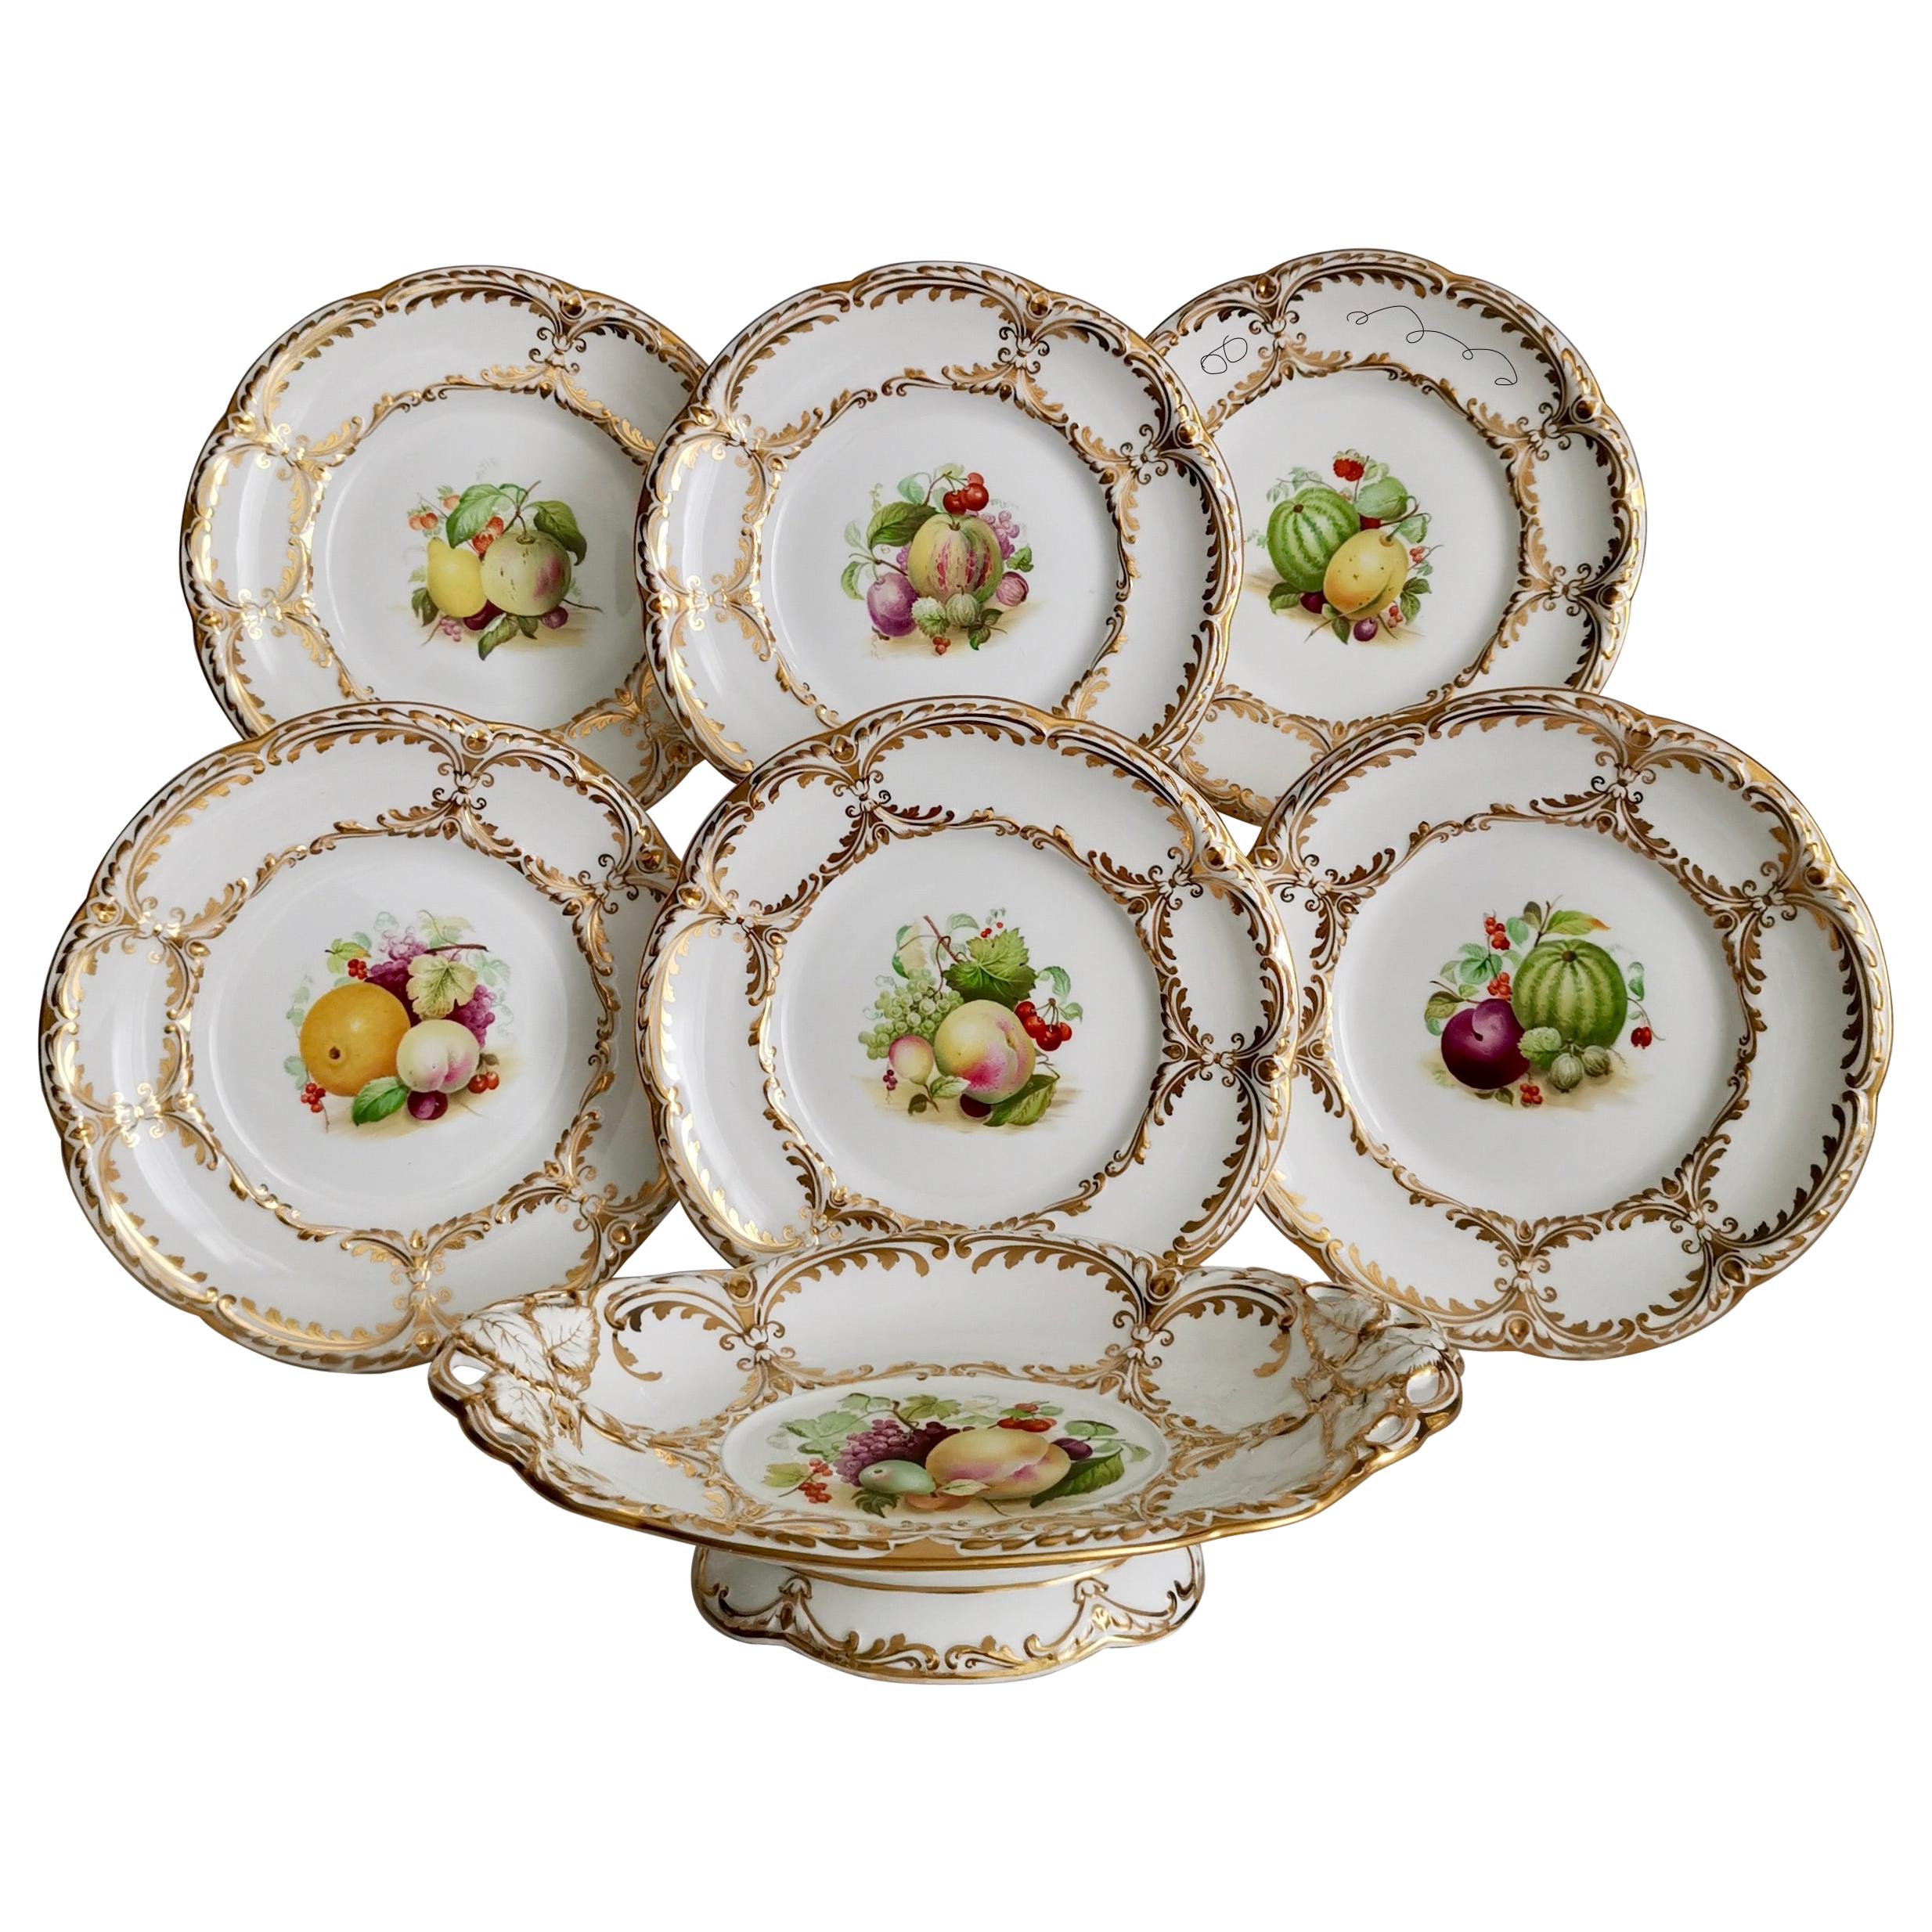 Davenport Porcelain Dessert Service, White, Handpainted Fruits, Victorian 1869